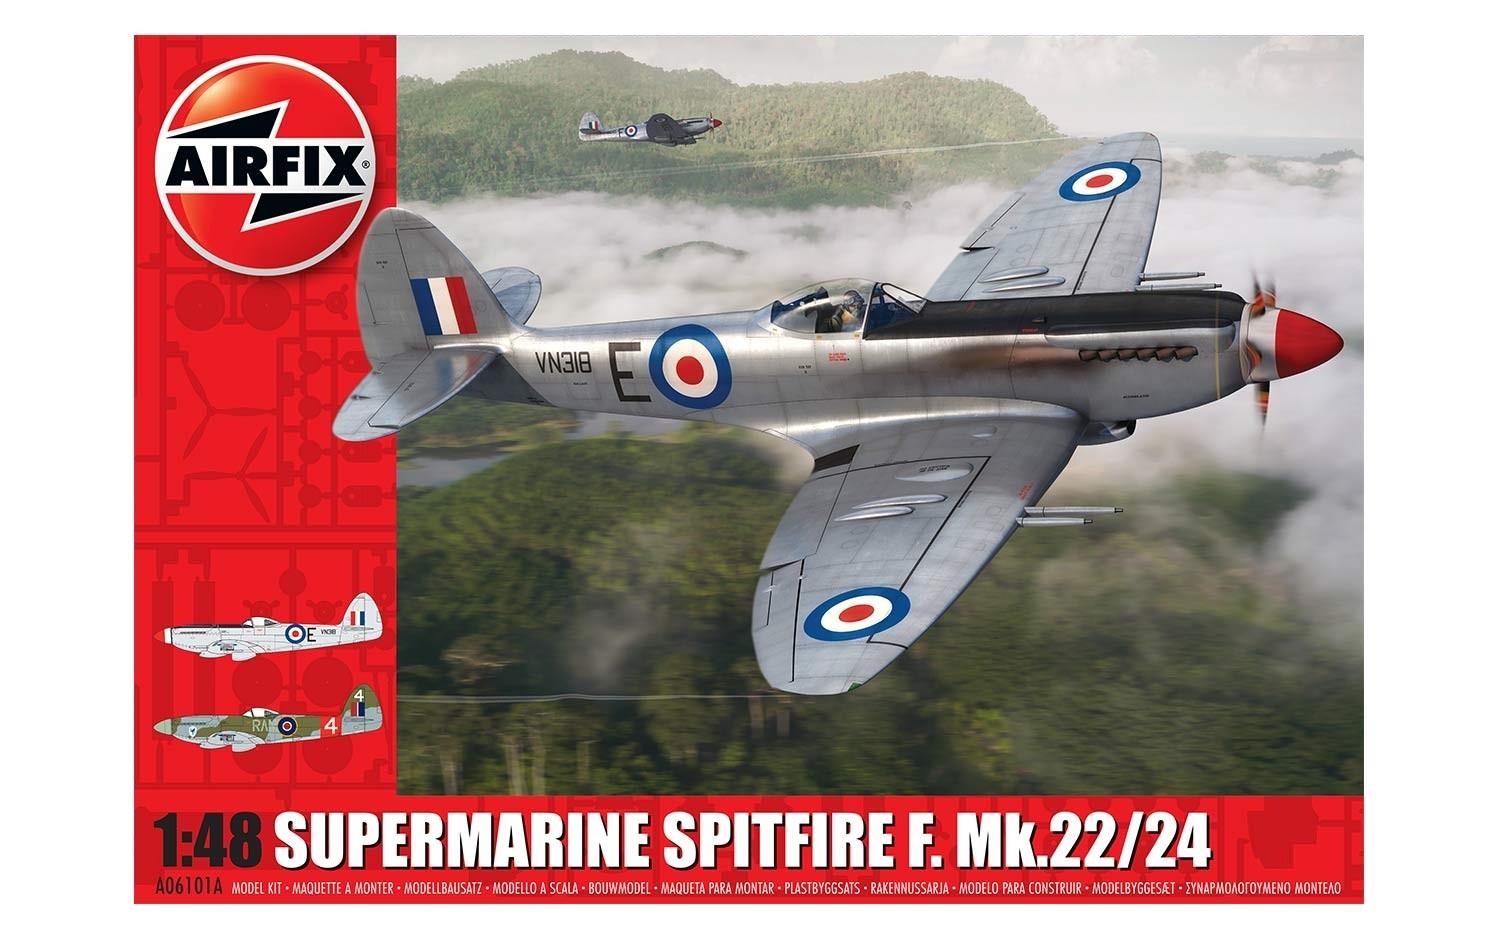 Supermarine Spitfire F.Mk.22/24